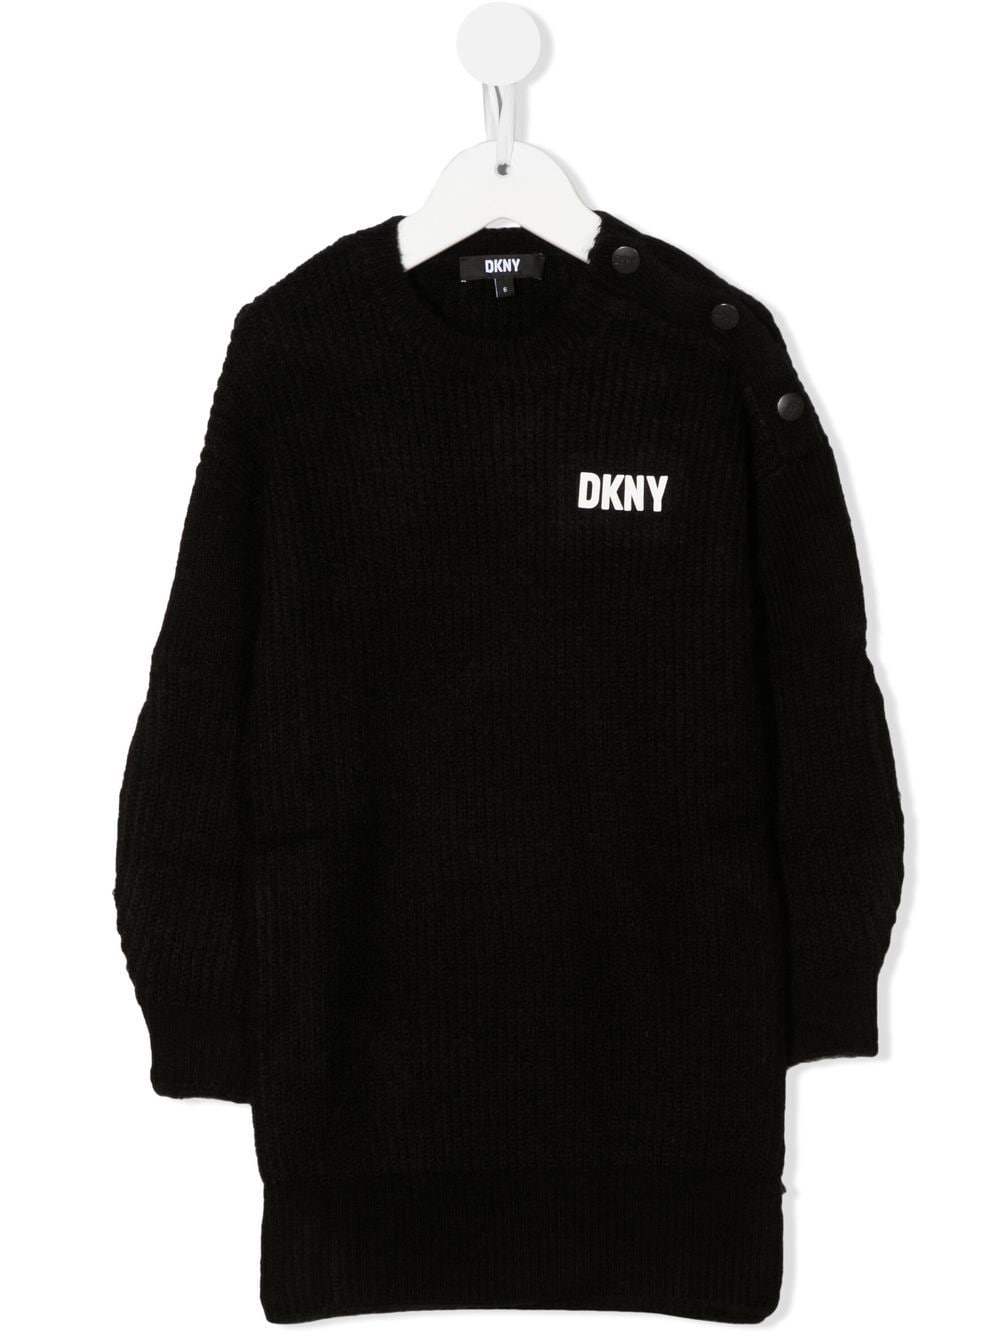 Image 1 of Dkny Kids logo-print knitted jumper dress